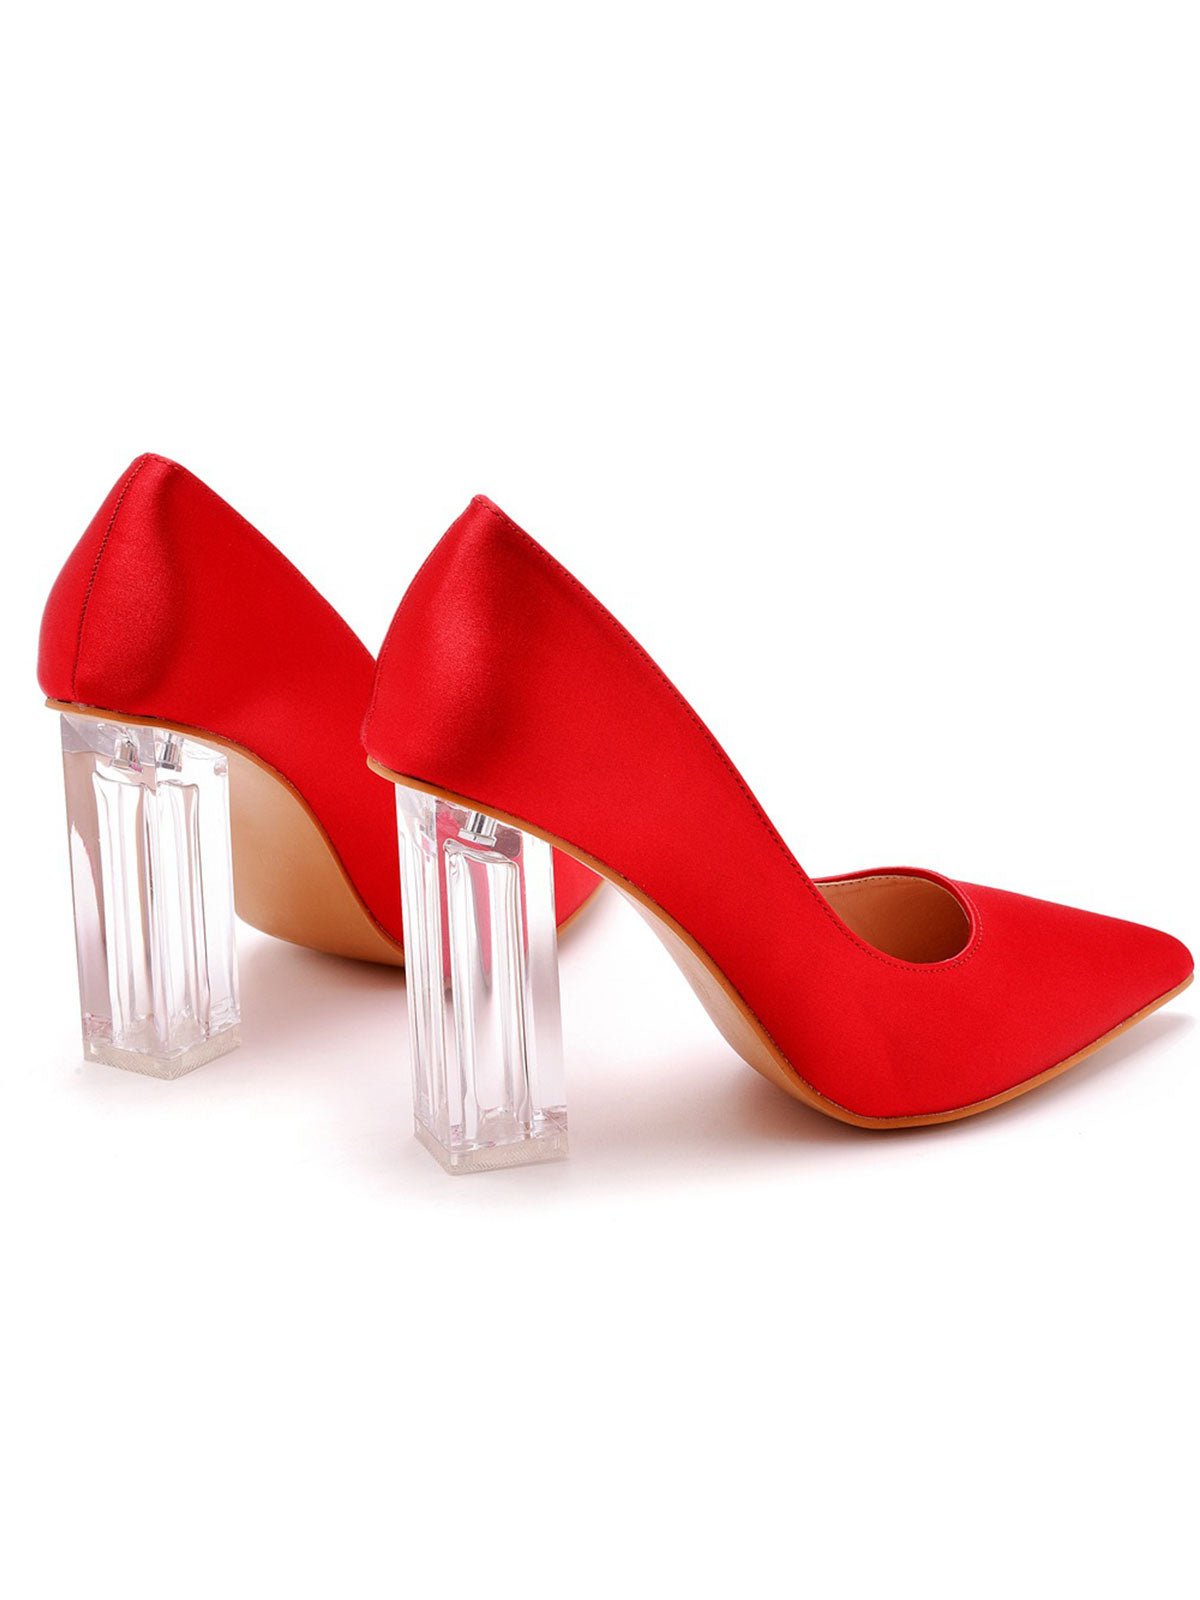 Simple Satin Slip on Pointed Toe Transparent Block Heels